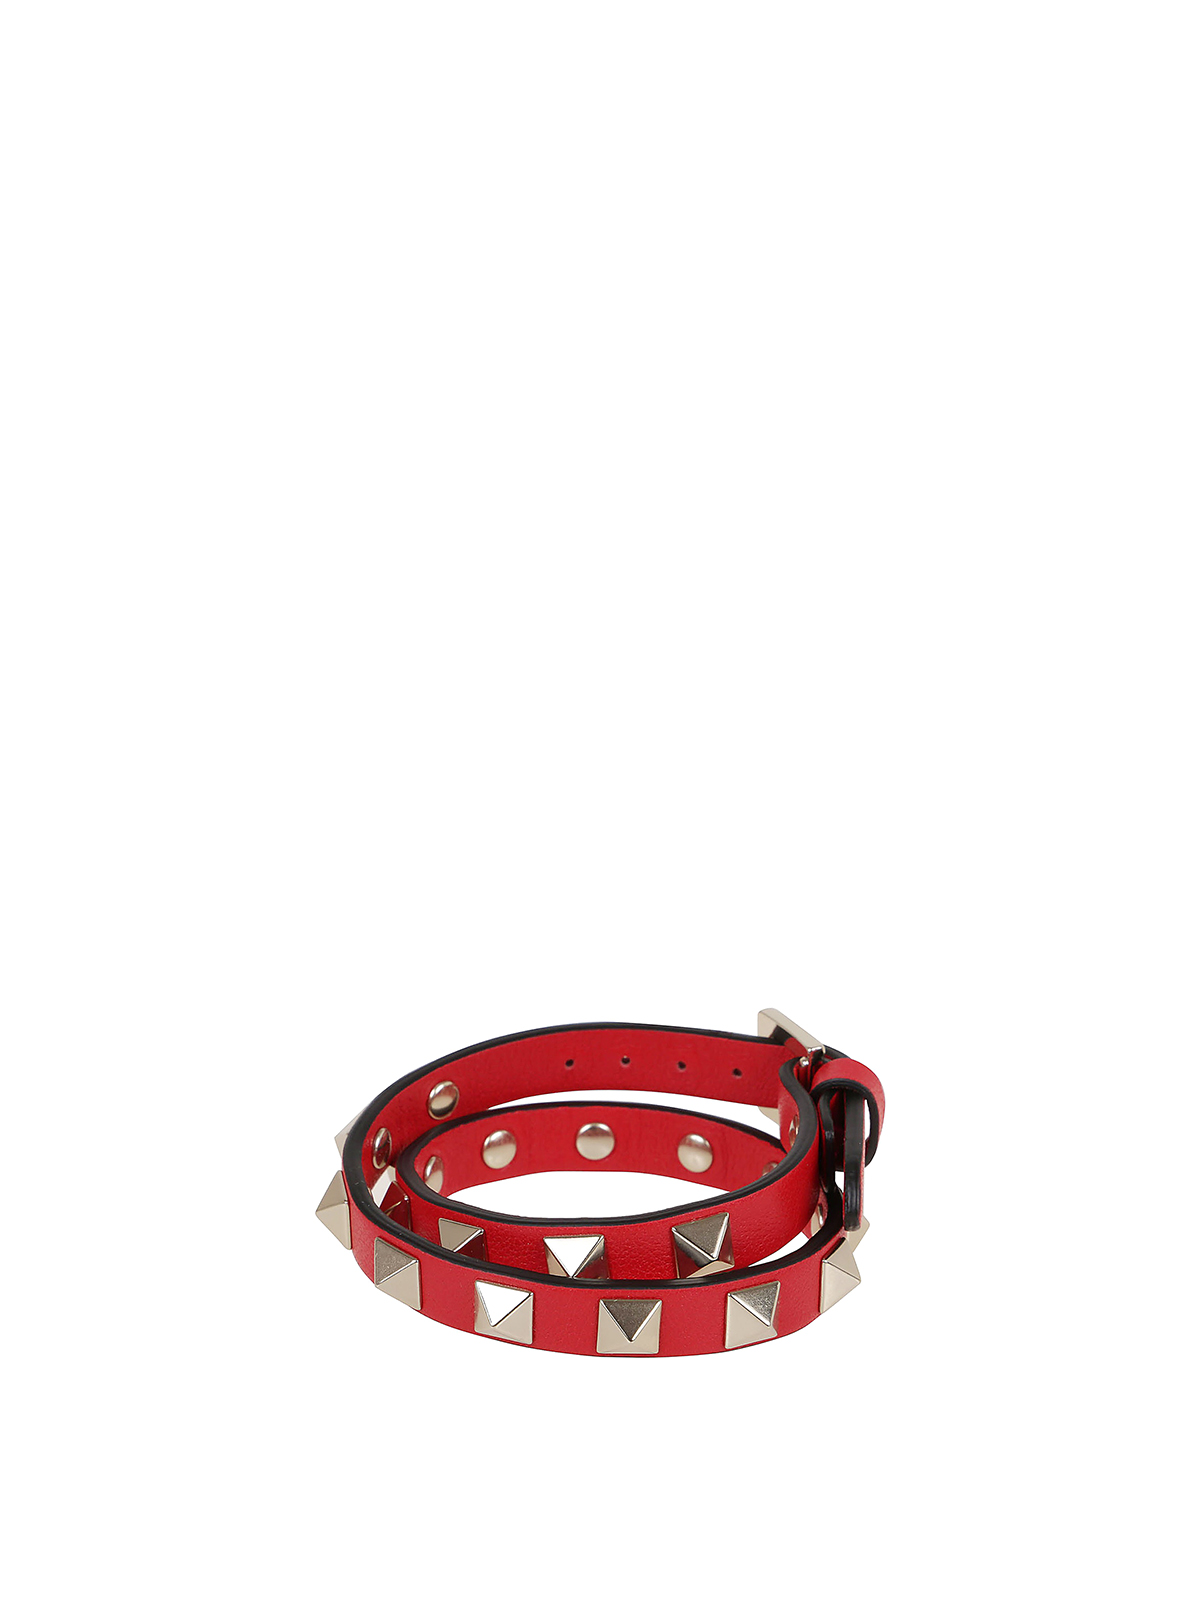 koncept gave Betsy Trotwood Bracelets & Bangles Valentino Garavani - Rockstud bracelet - VW2J0703VITJU5